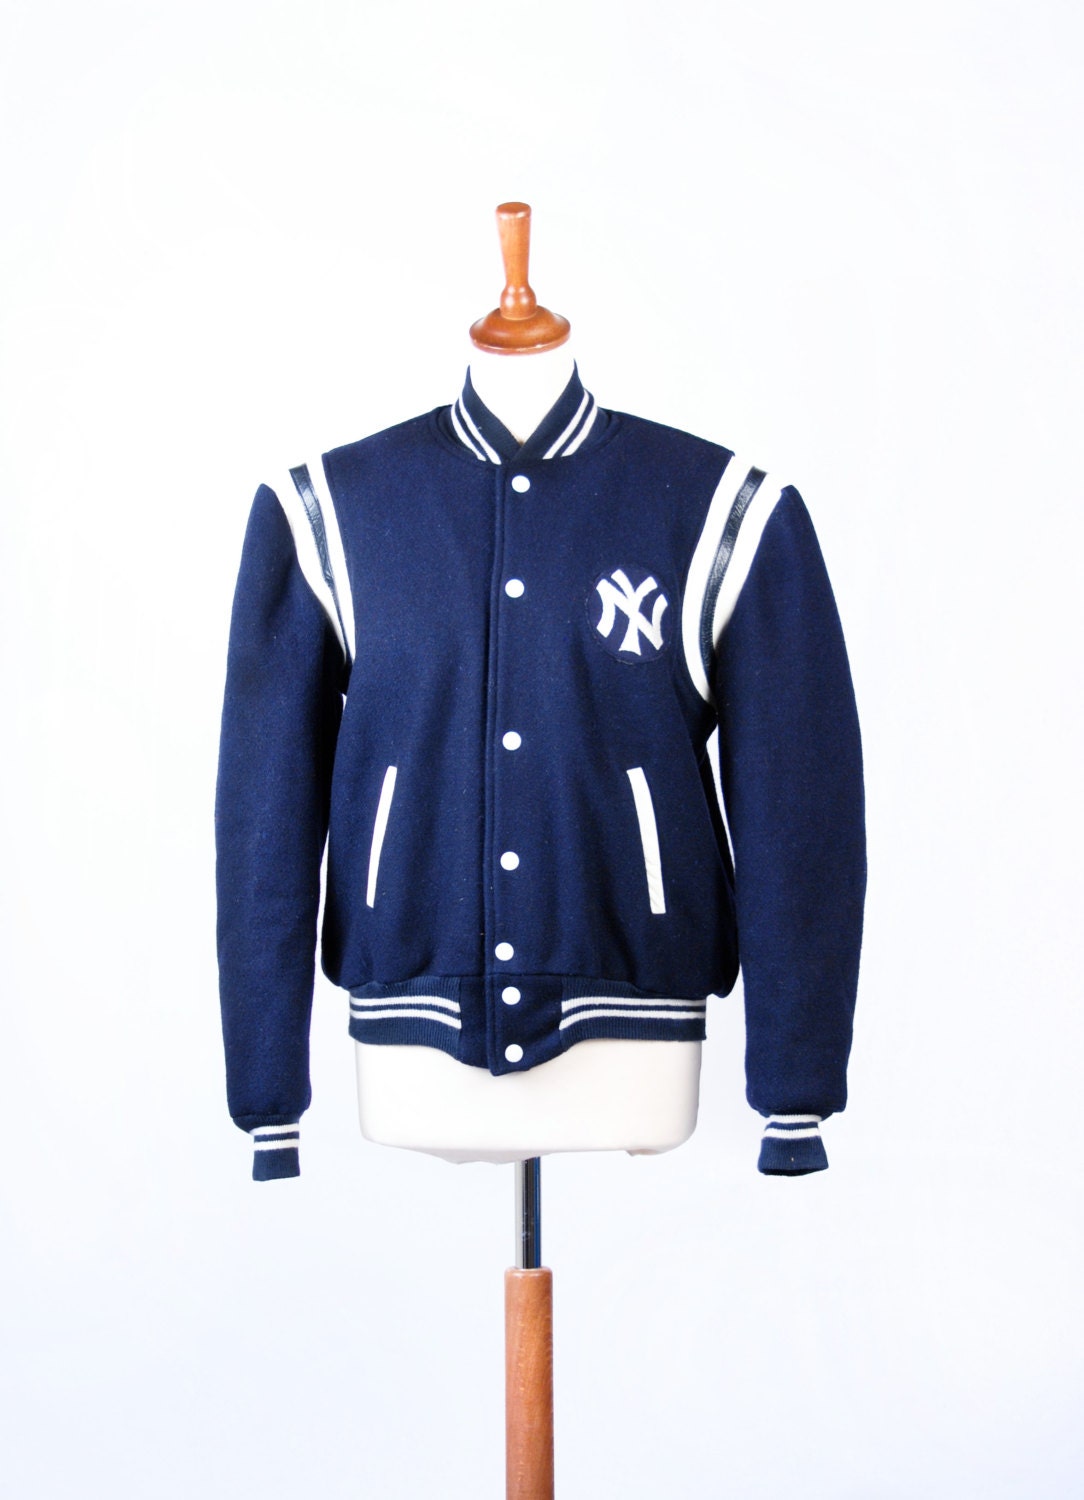 Vintage 1950's New York Yankees Twill Letterman Jacket